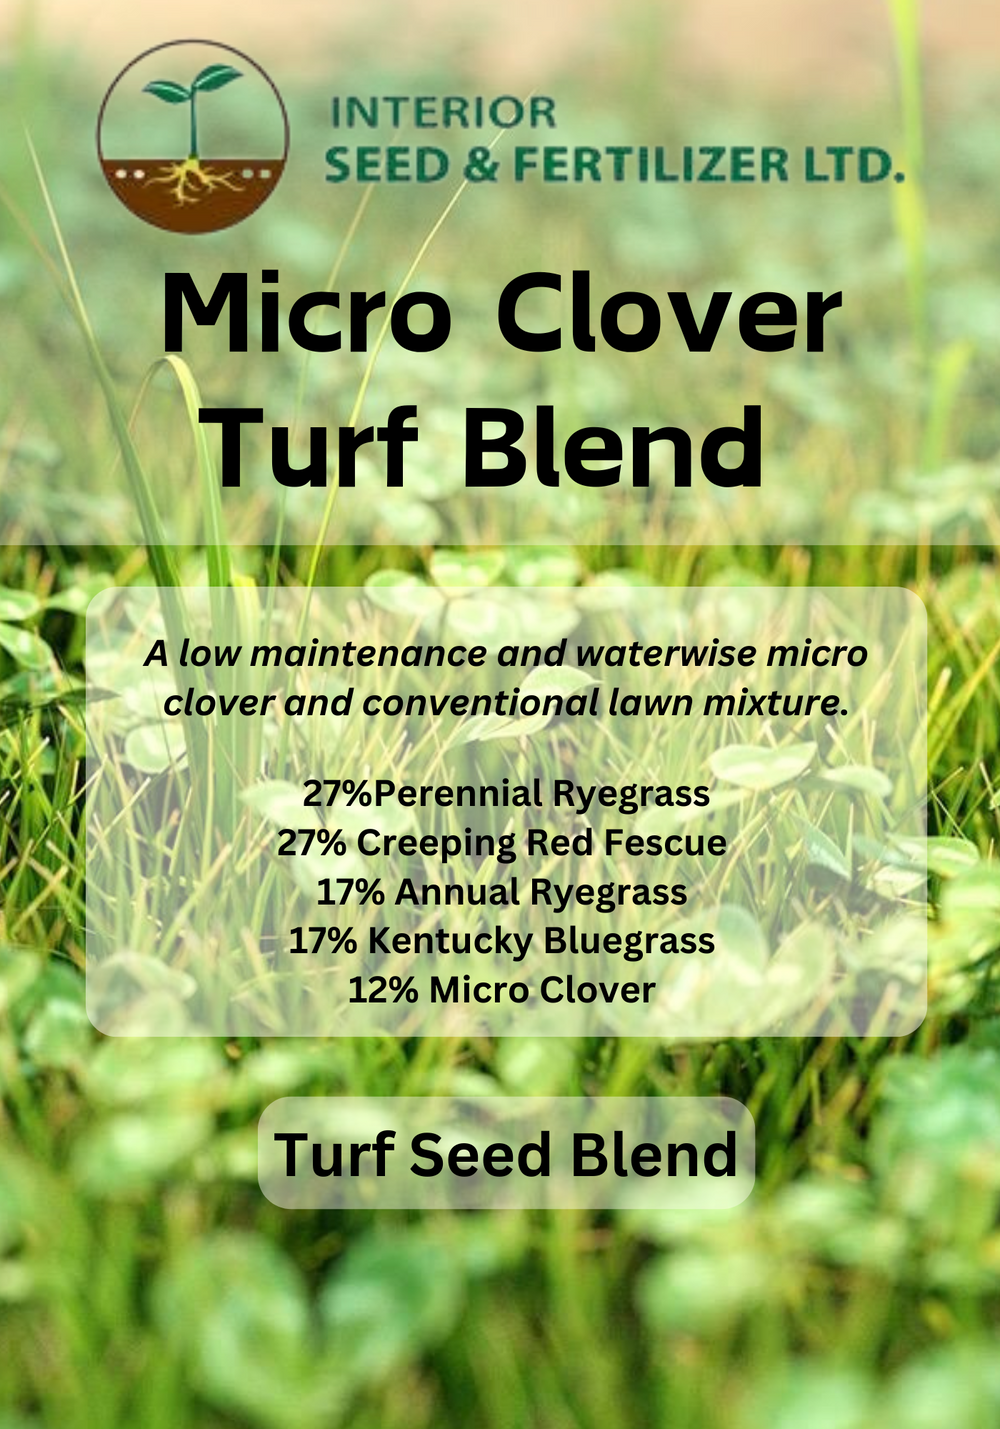 Micro Clover Turf Blend